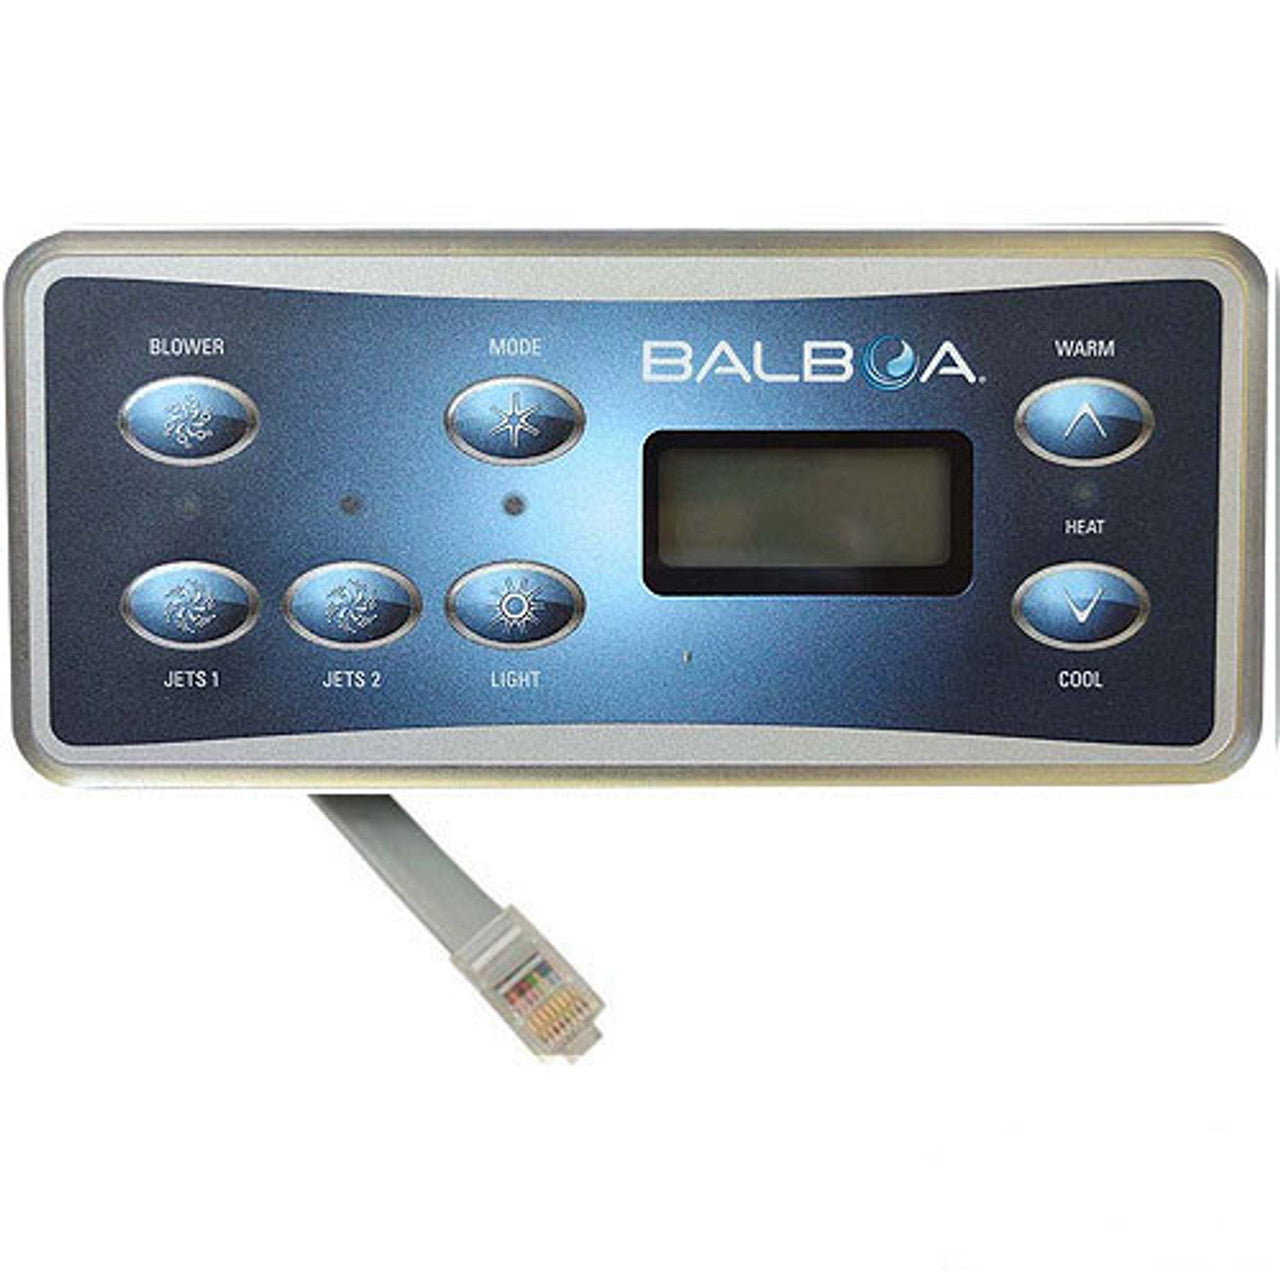 Balboa VL701 control display